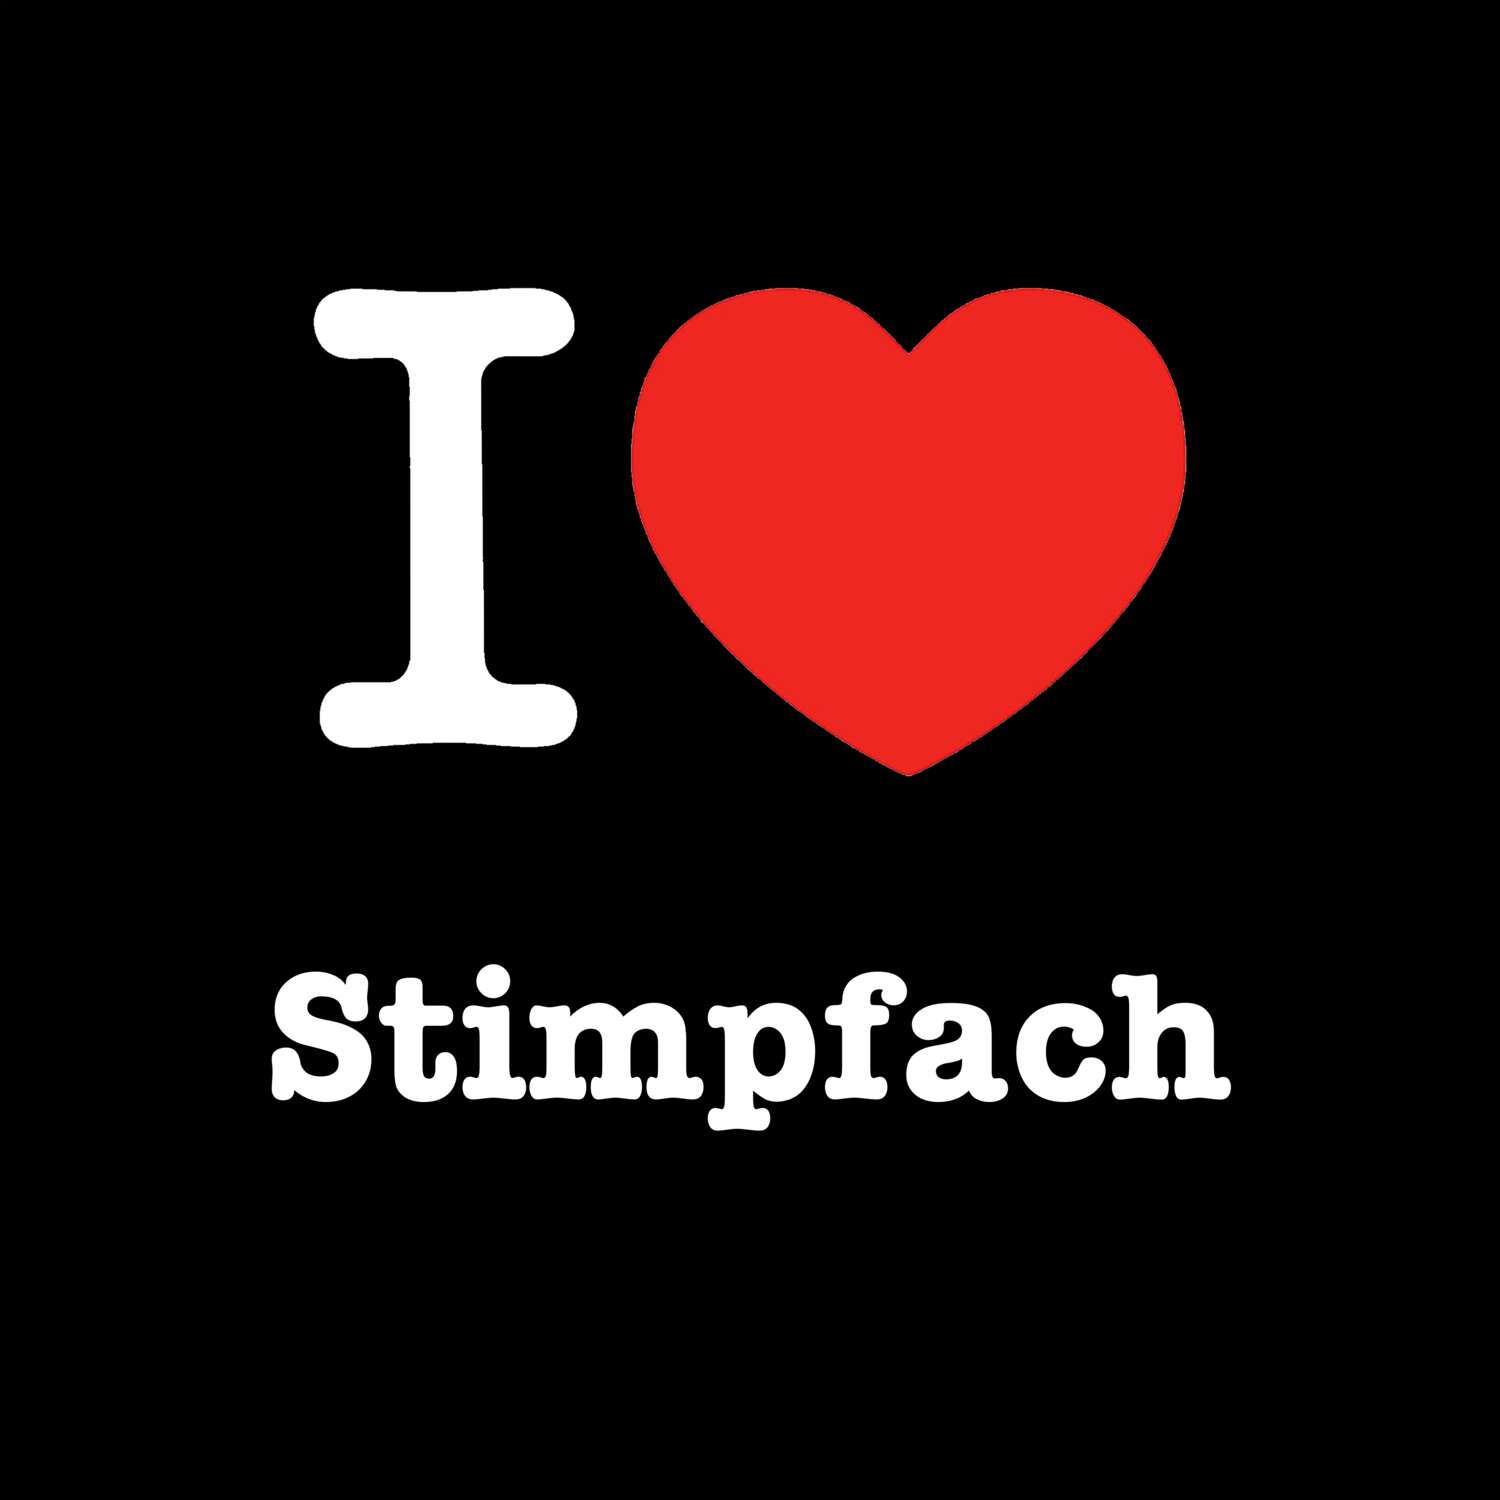 Stimpfach T-Shirt »I love«